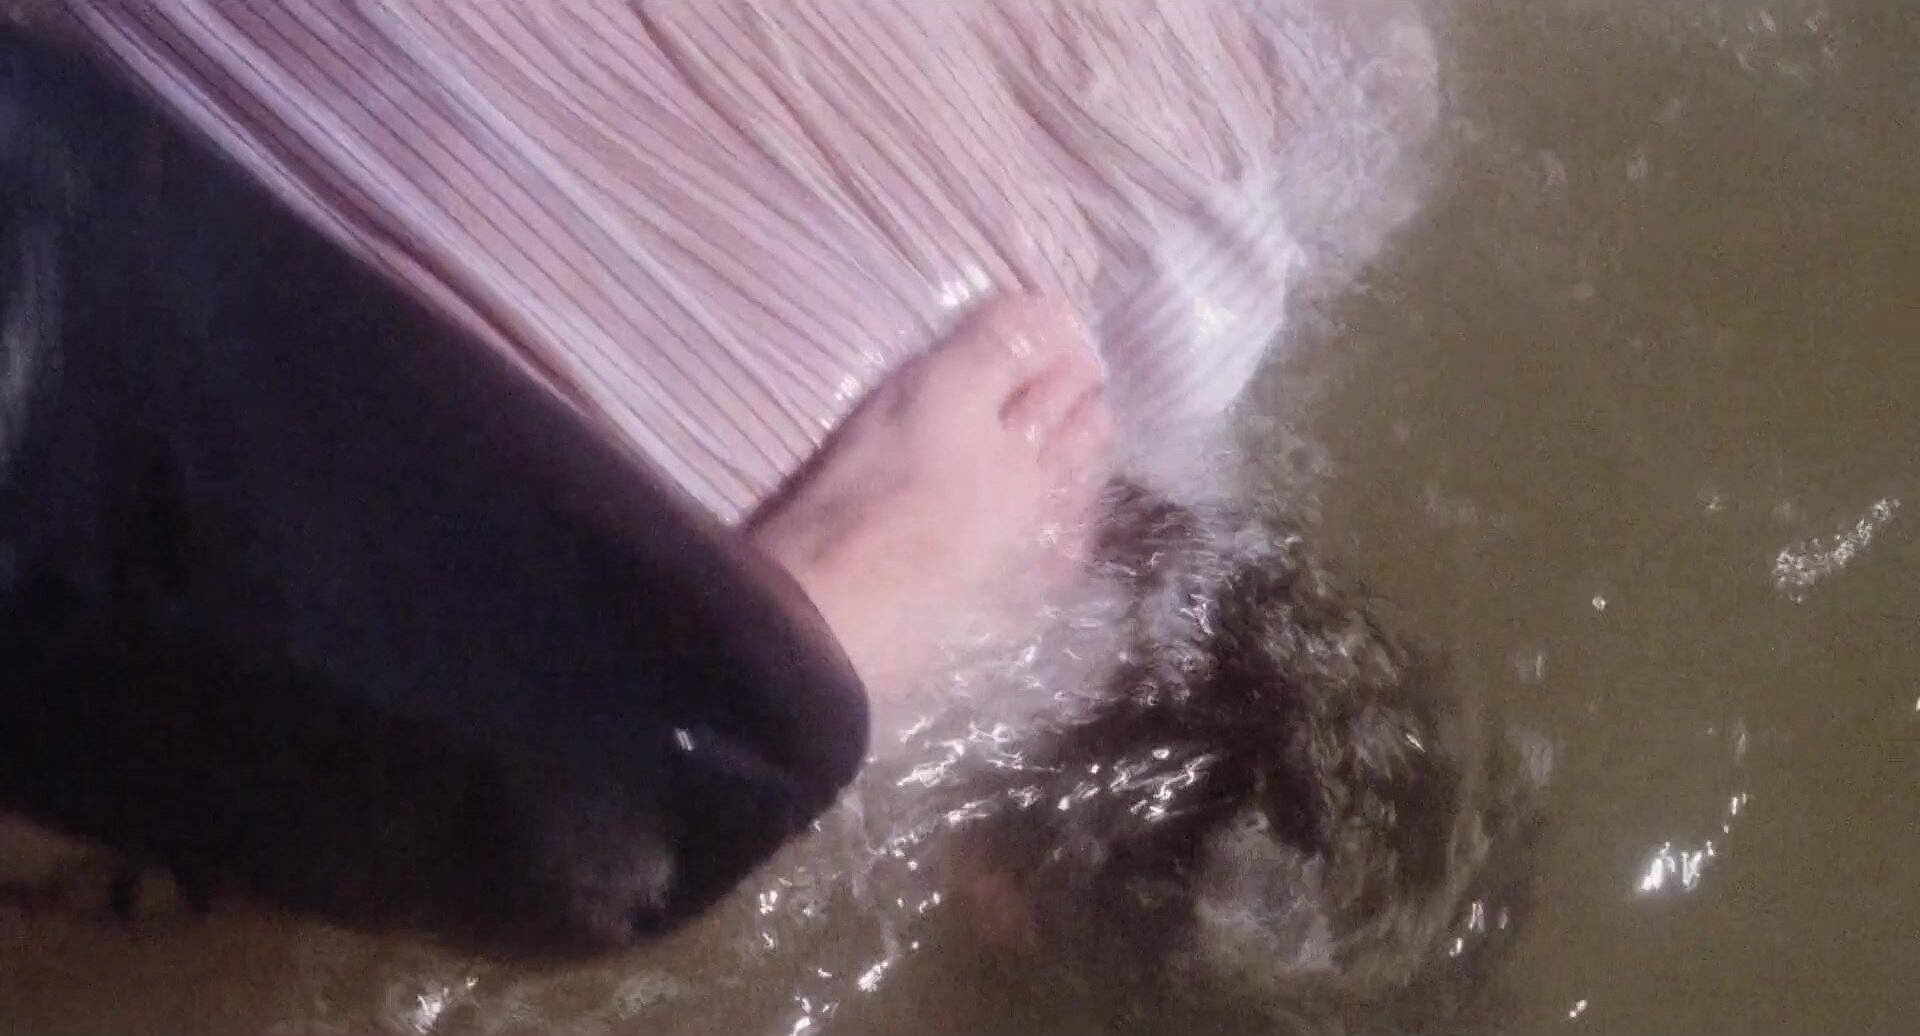 Femdom - Attempt drown under bare foot trample